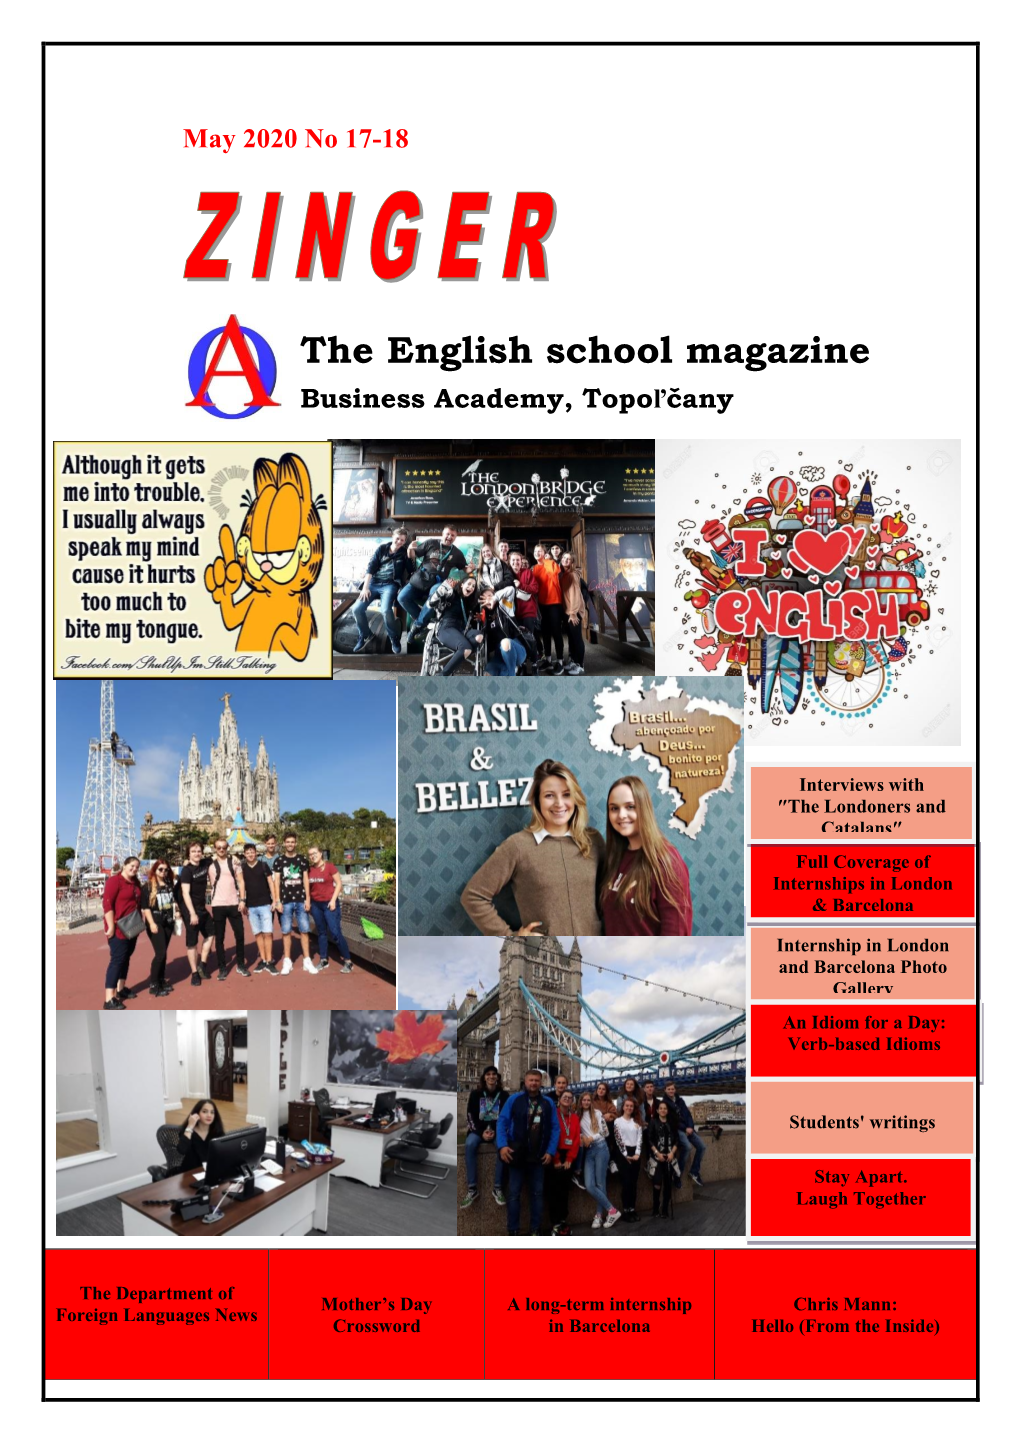 The English School Magazine Business Academy, Topoľčany